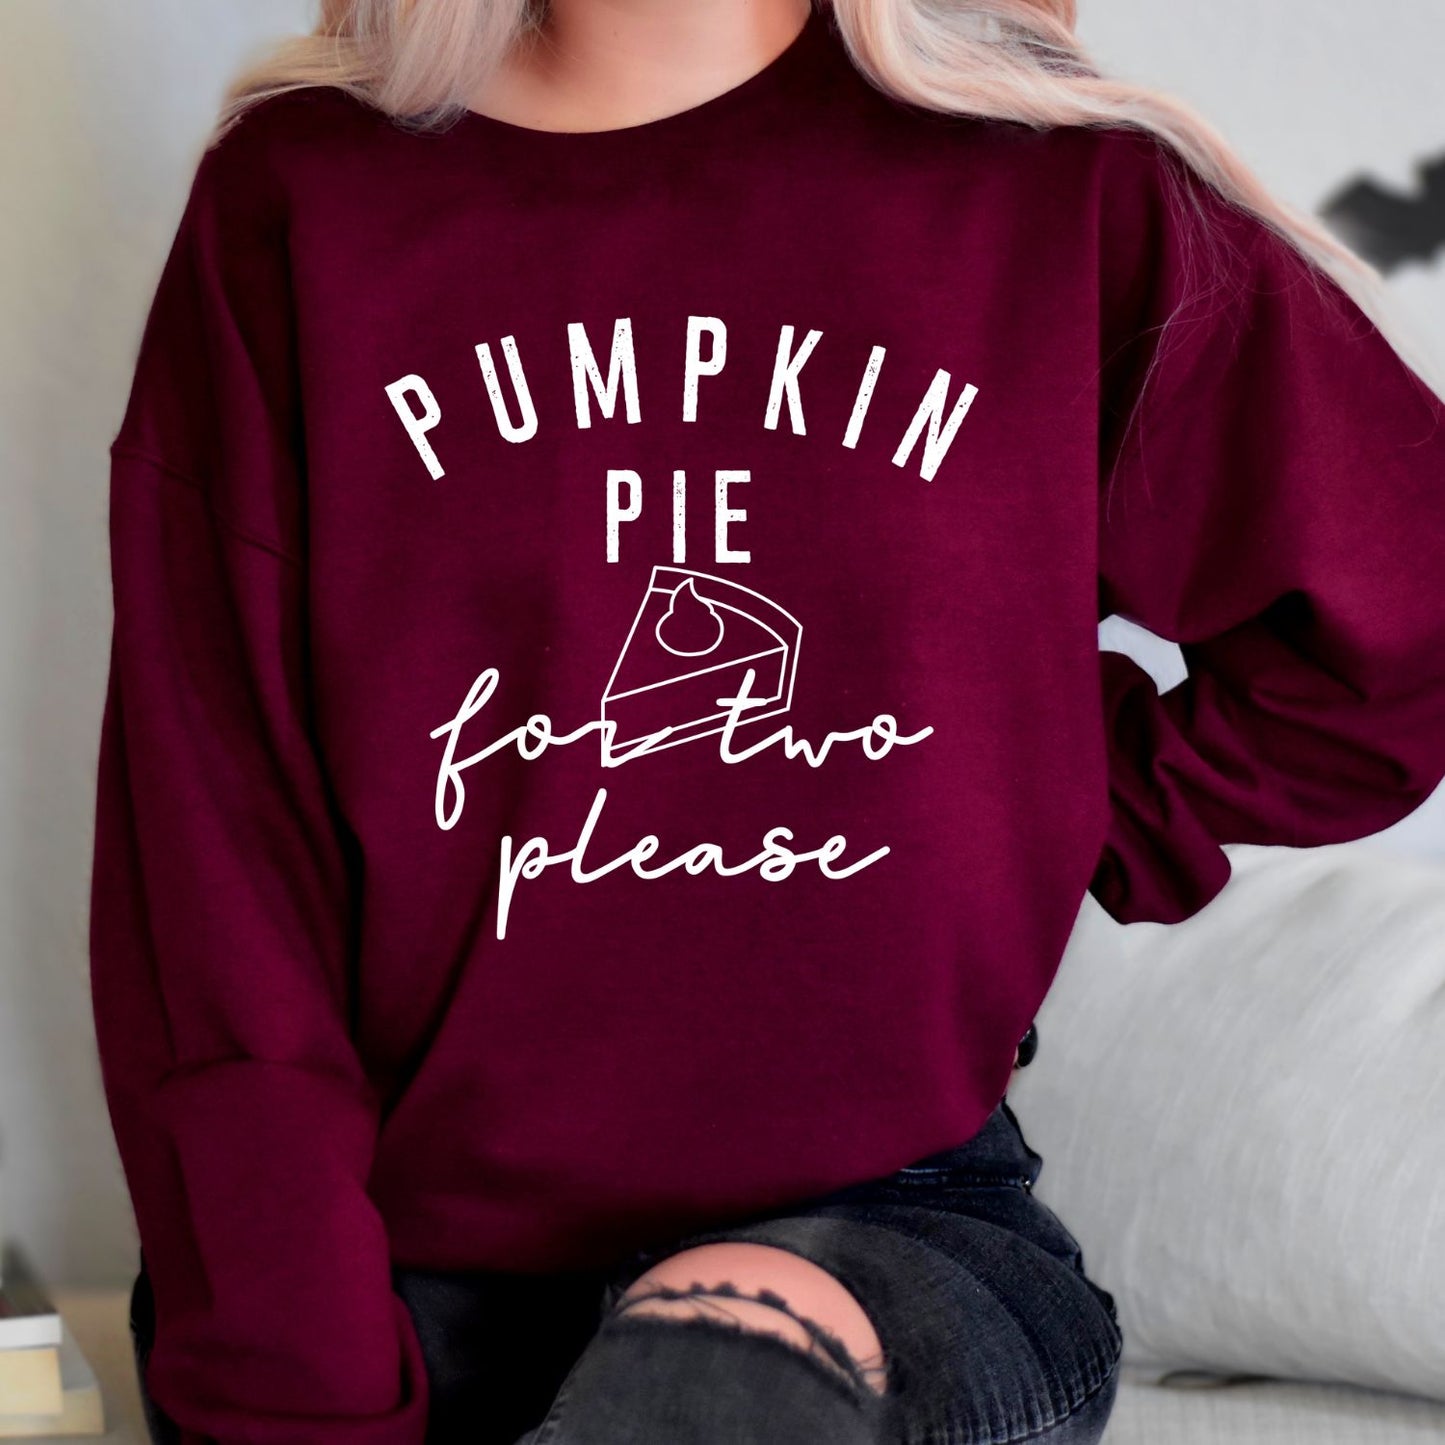 Pumpkin Pie For Two Sweatshirt